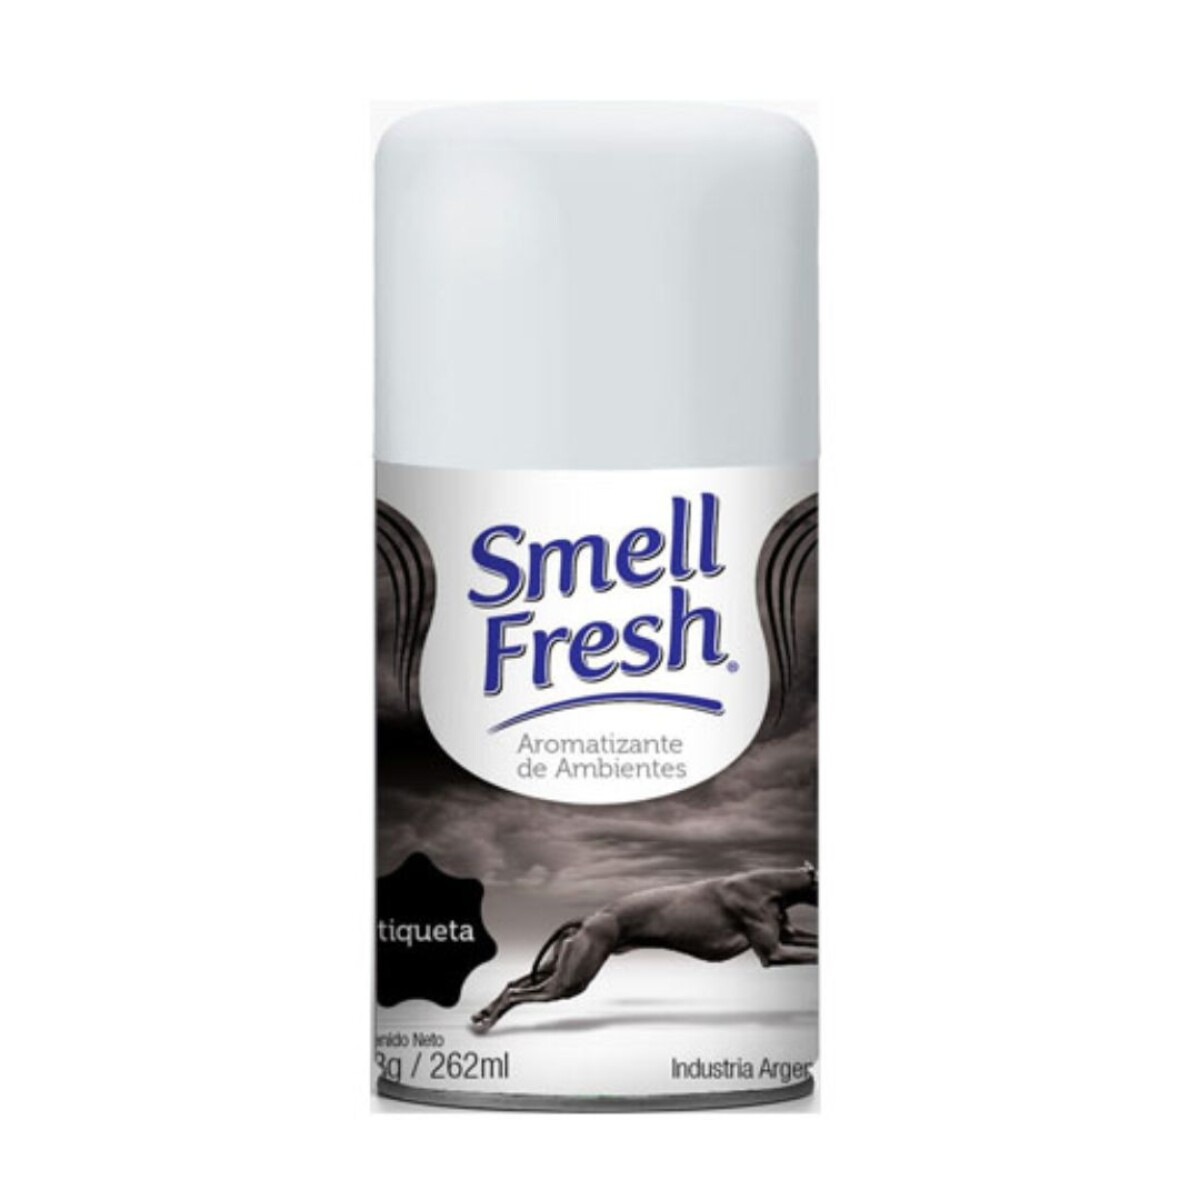 Aromatizante Smell Fresh - Etiqueta 